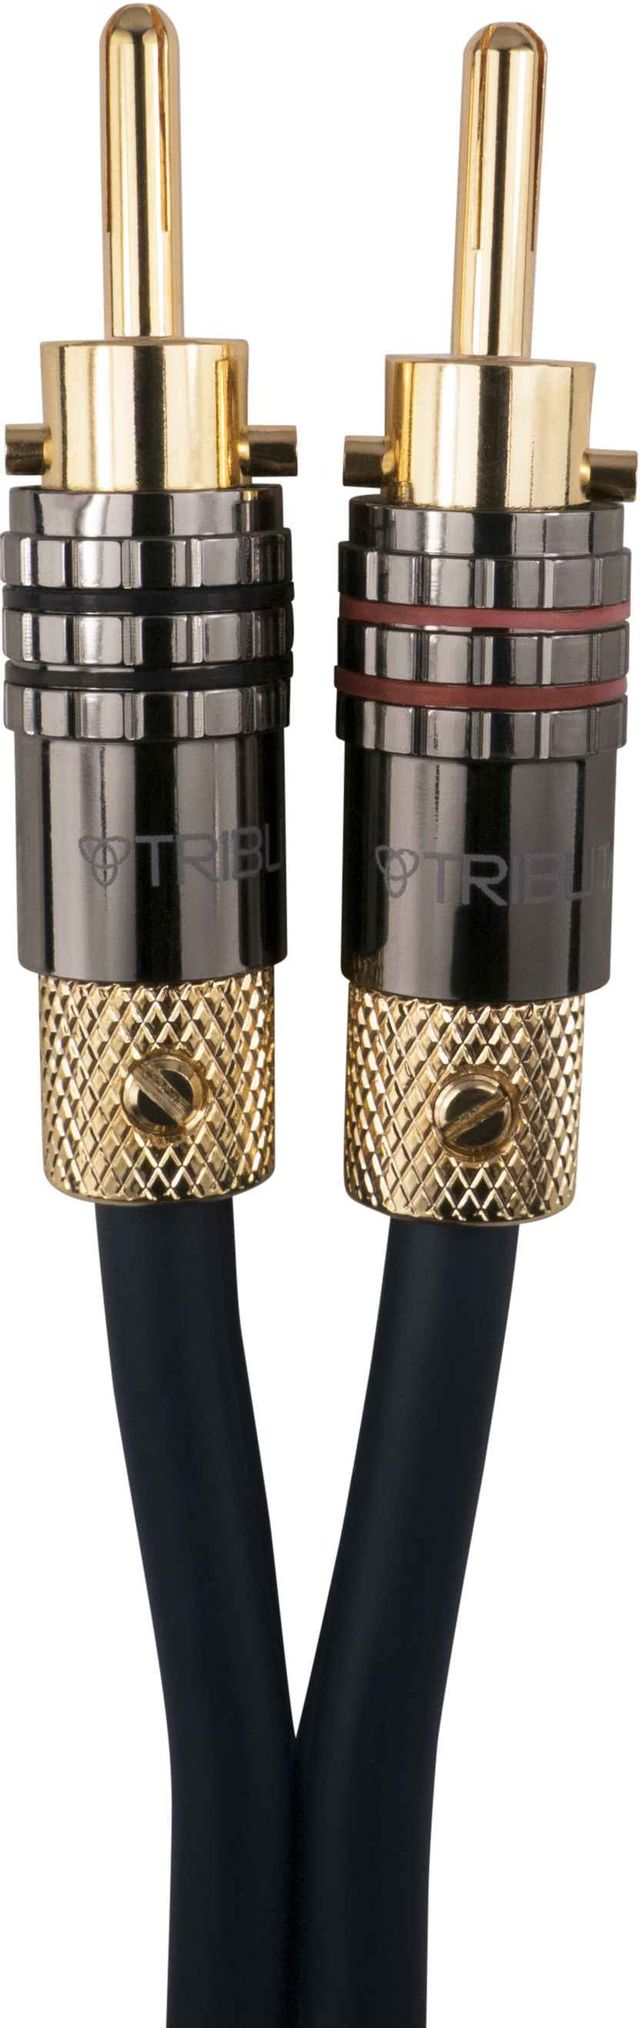 Tributaries® Series 8 6 Ft. Banana Plugs Speaker Cable 0